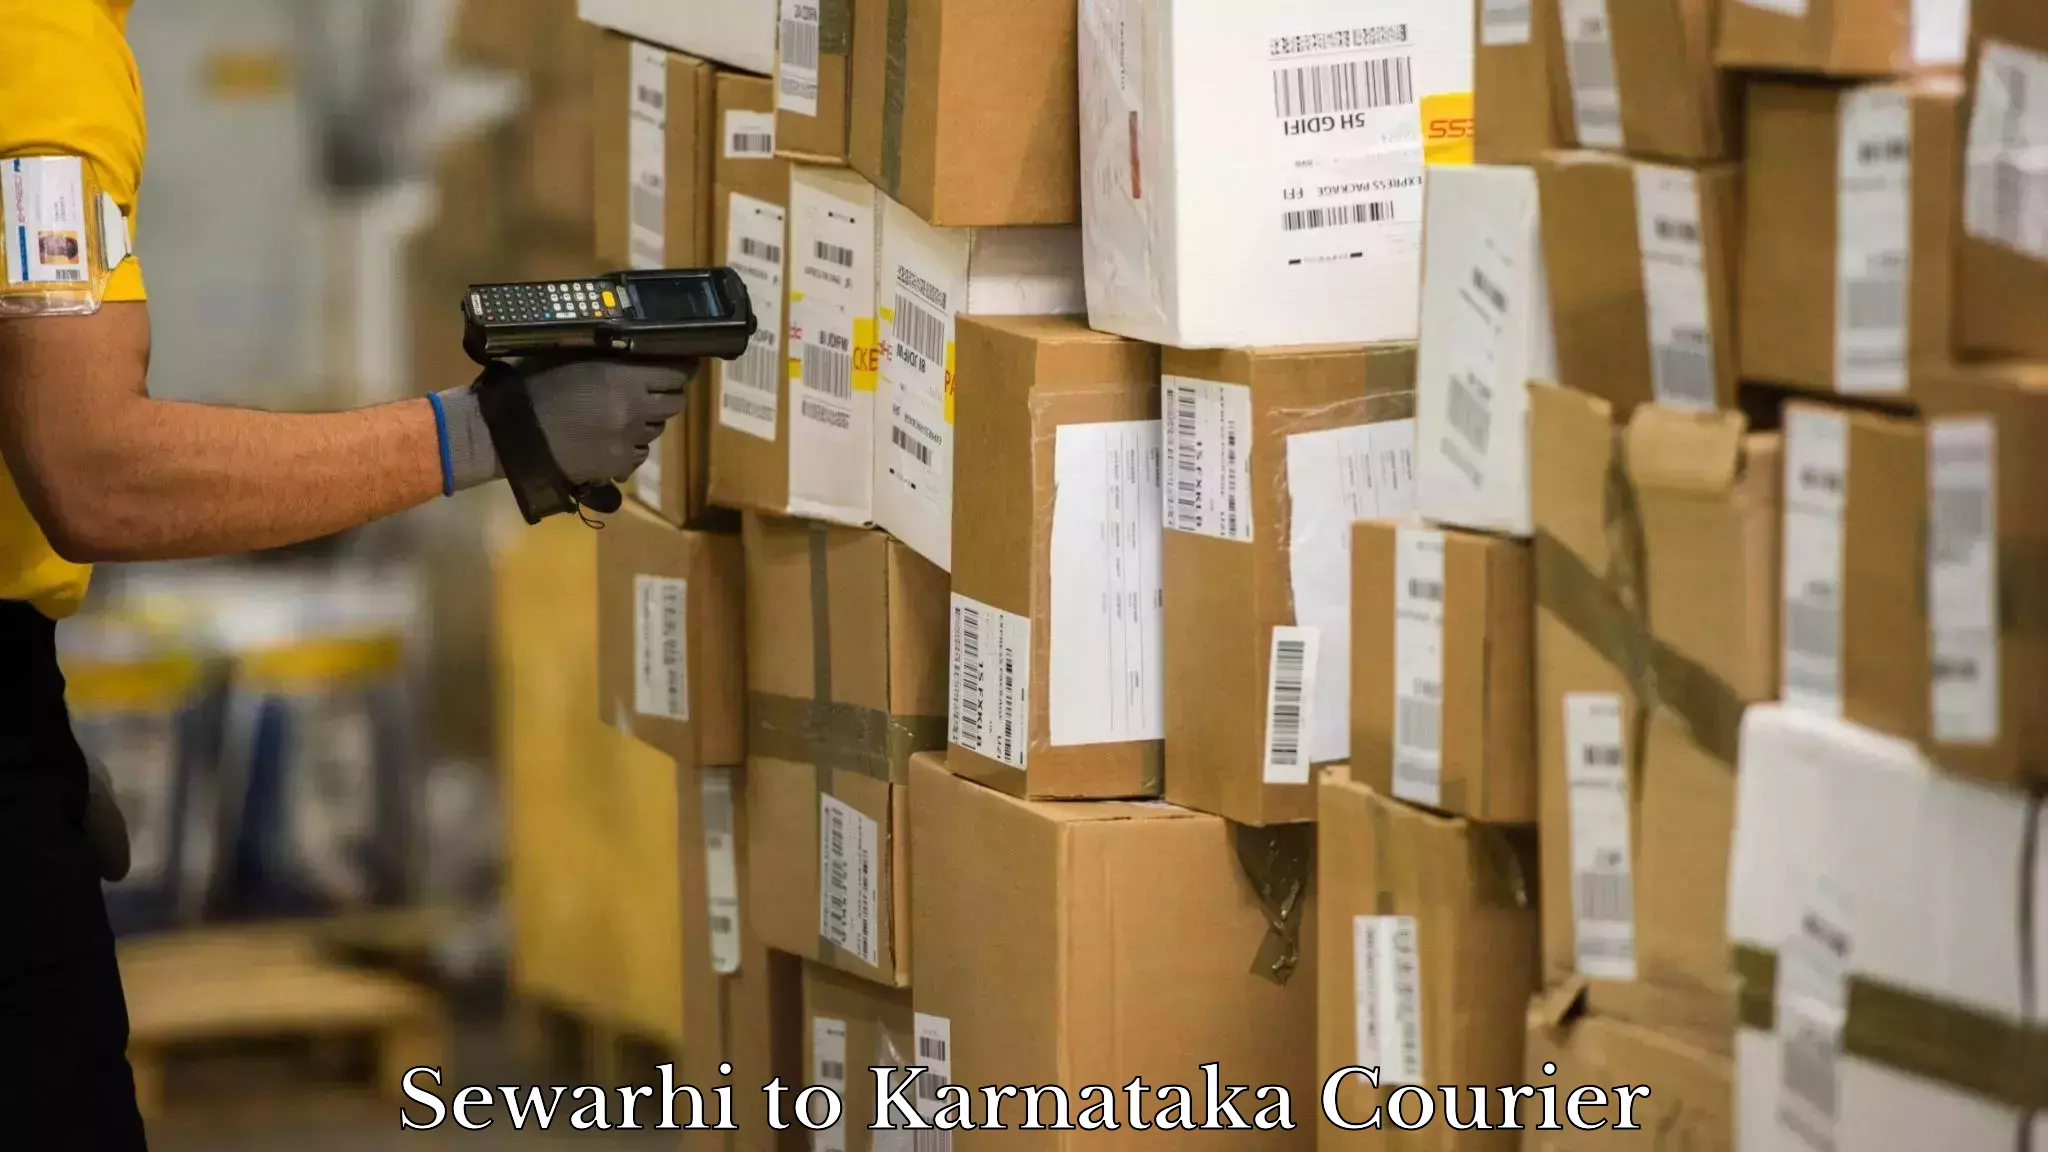 Enhanced tracking features in Sewarhi to Karnataka